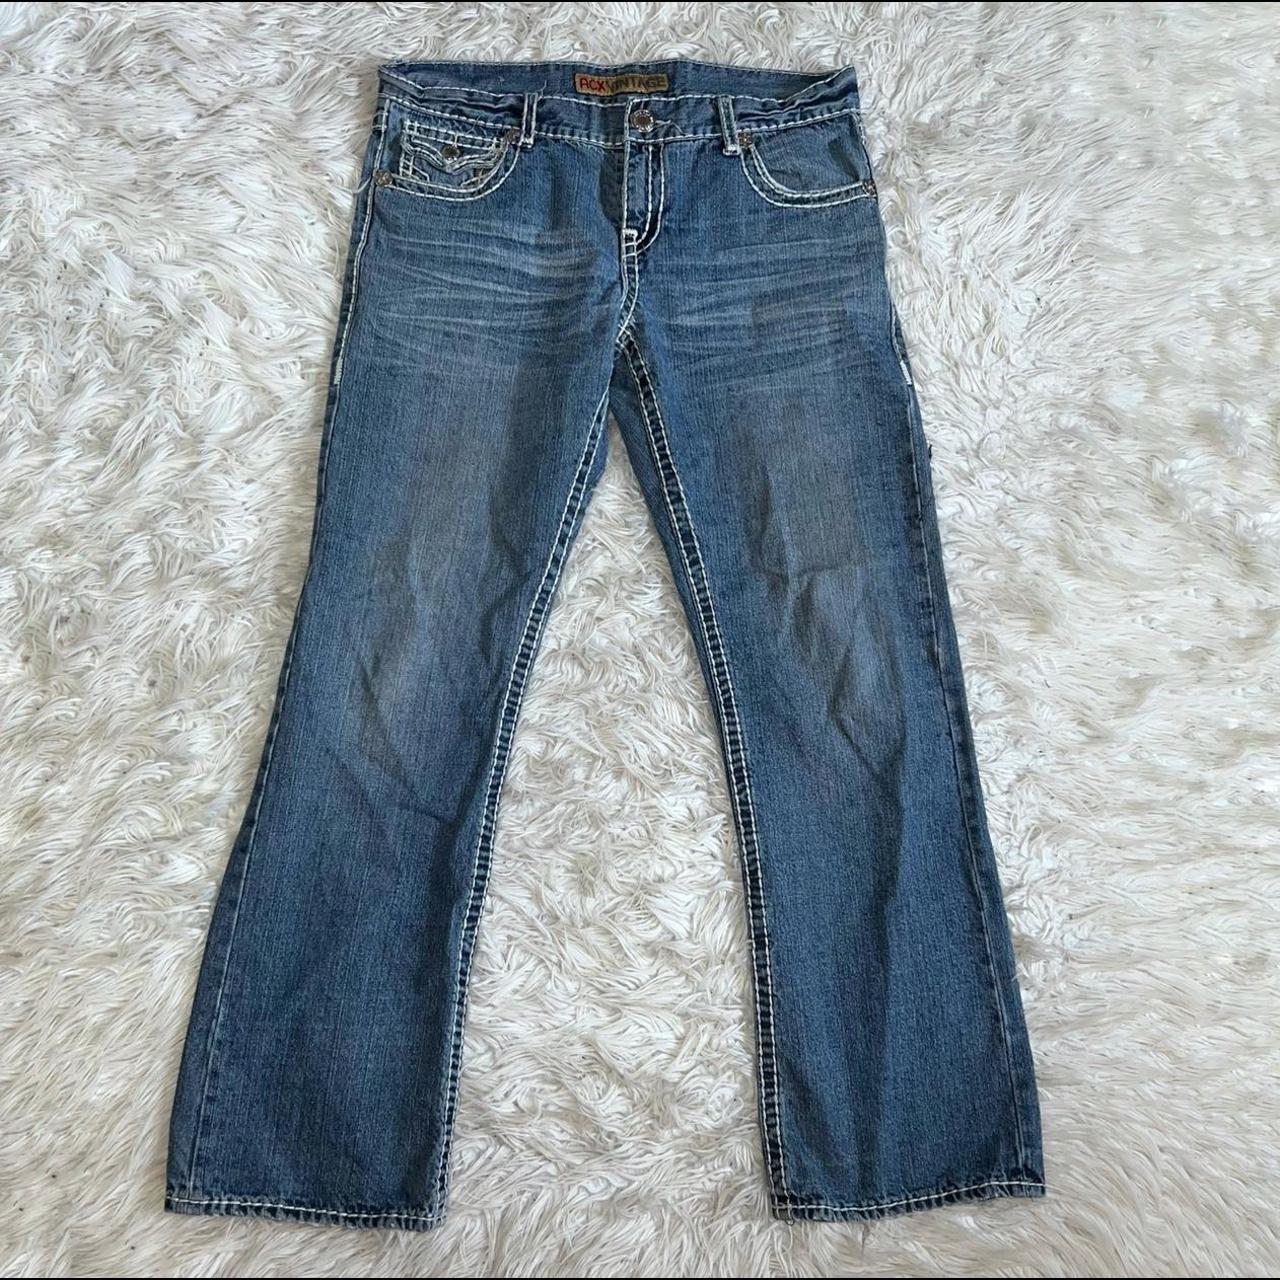 RCX Vintage Baggy Contrast Stitch Jeans Instant... - Depop